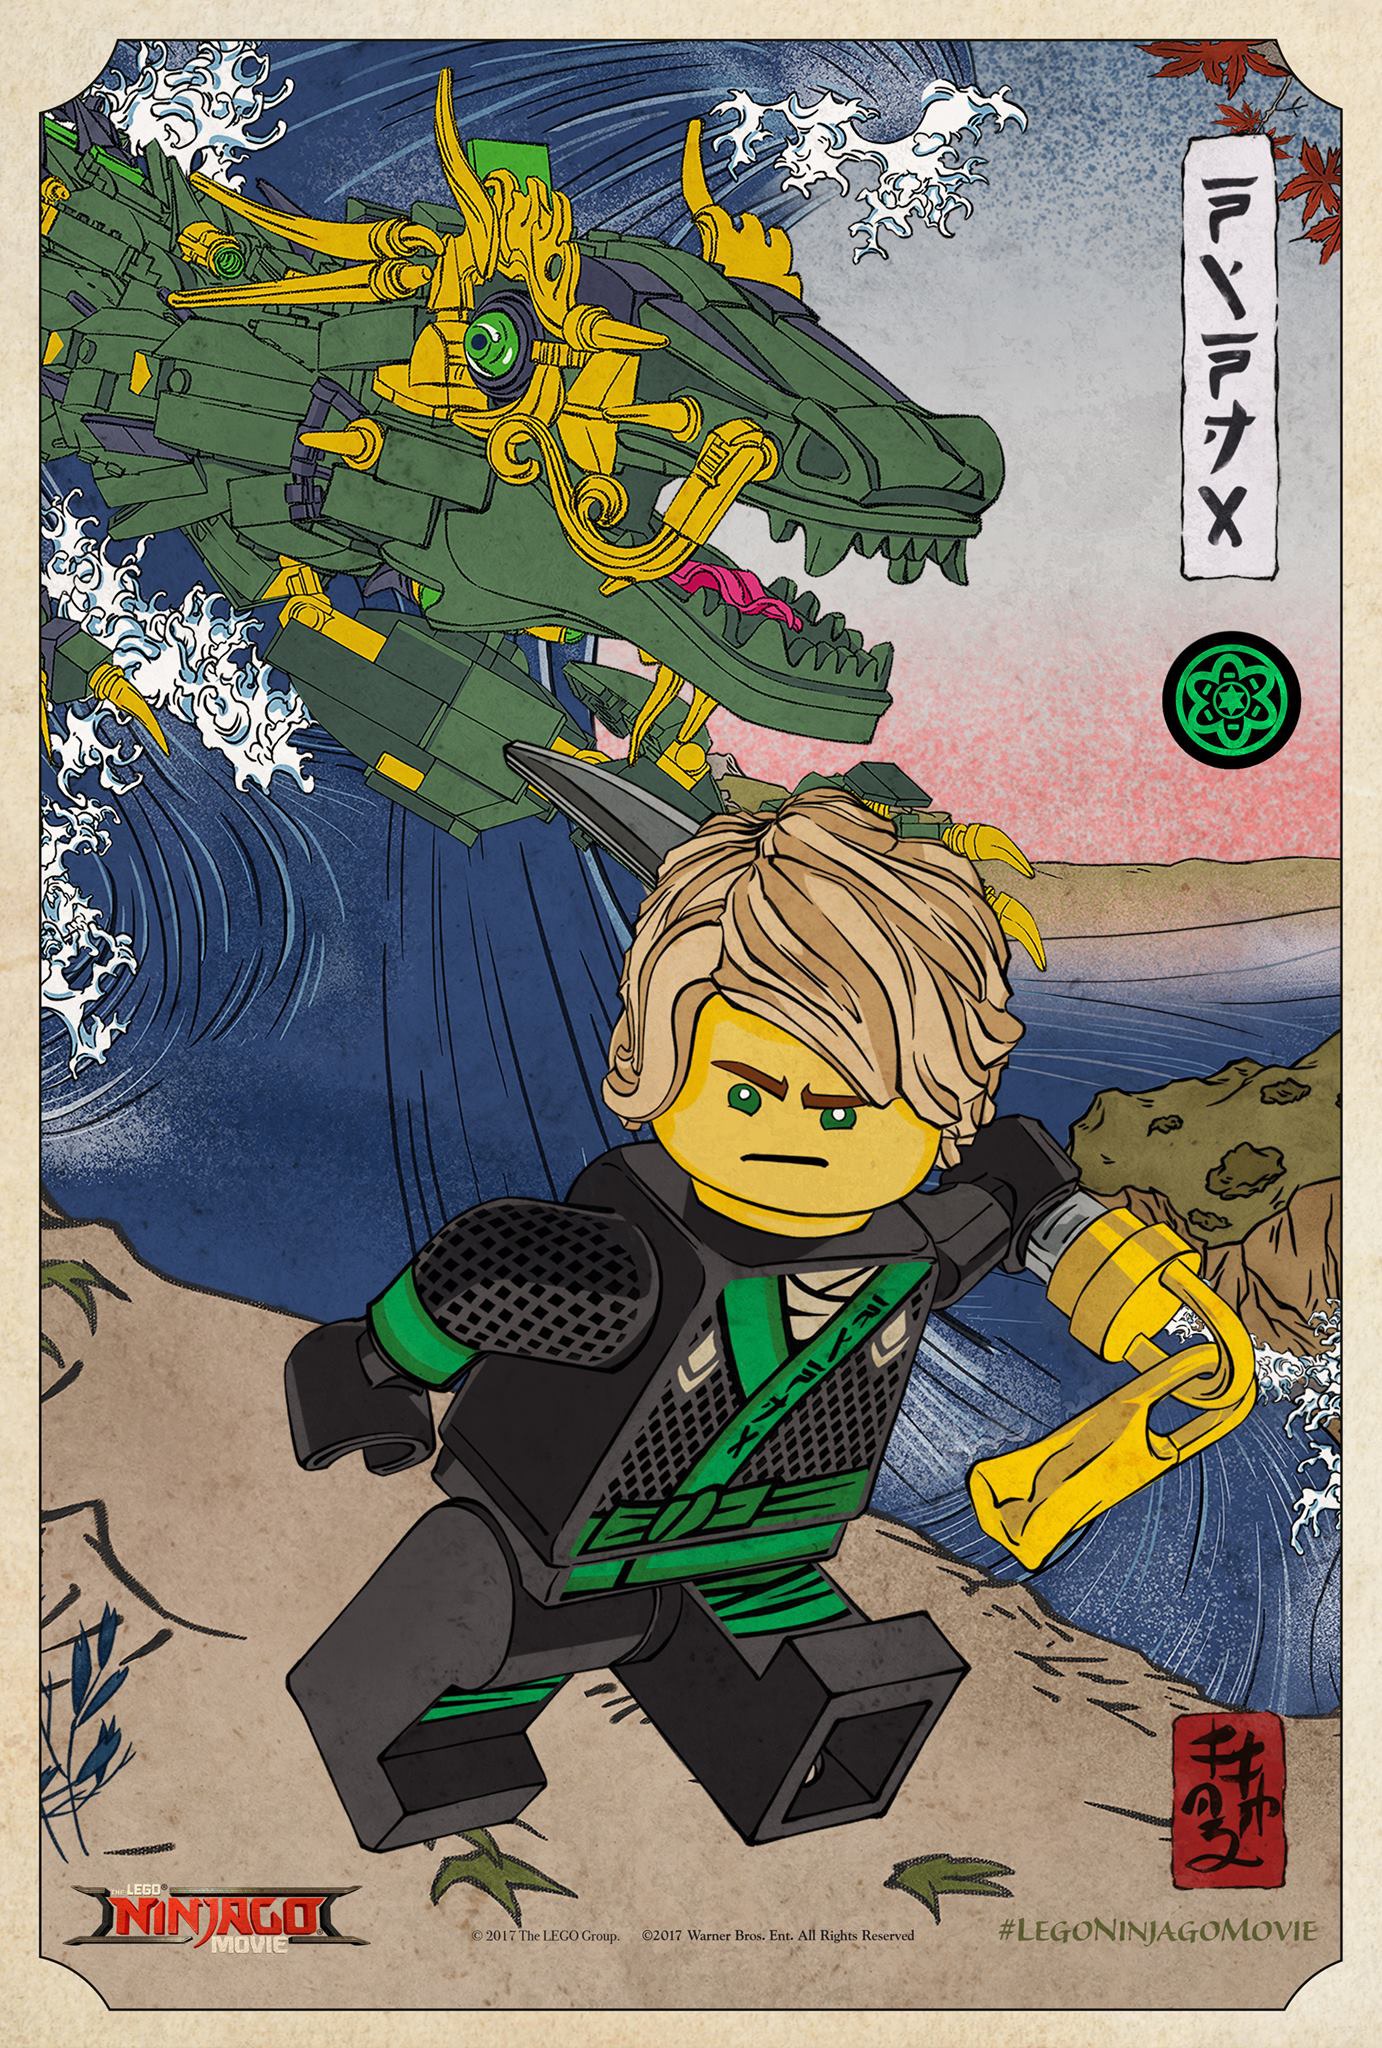 Mega Sized Movie Poster Image for The Lego Ninjago Movie (#22 of 36)